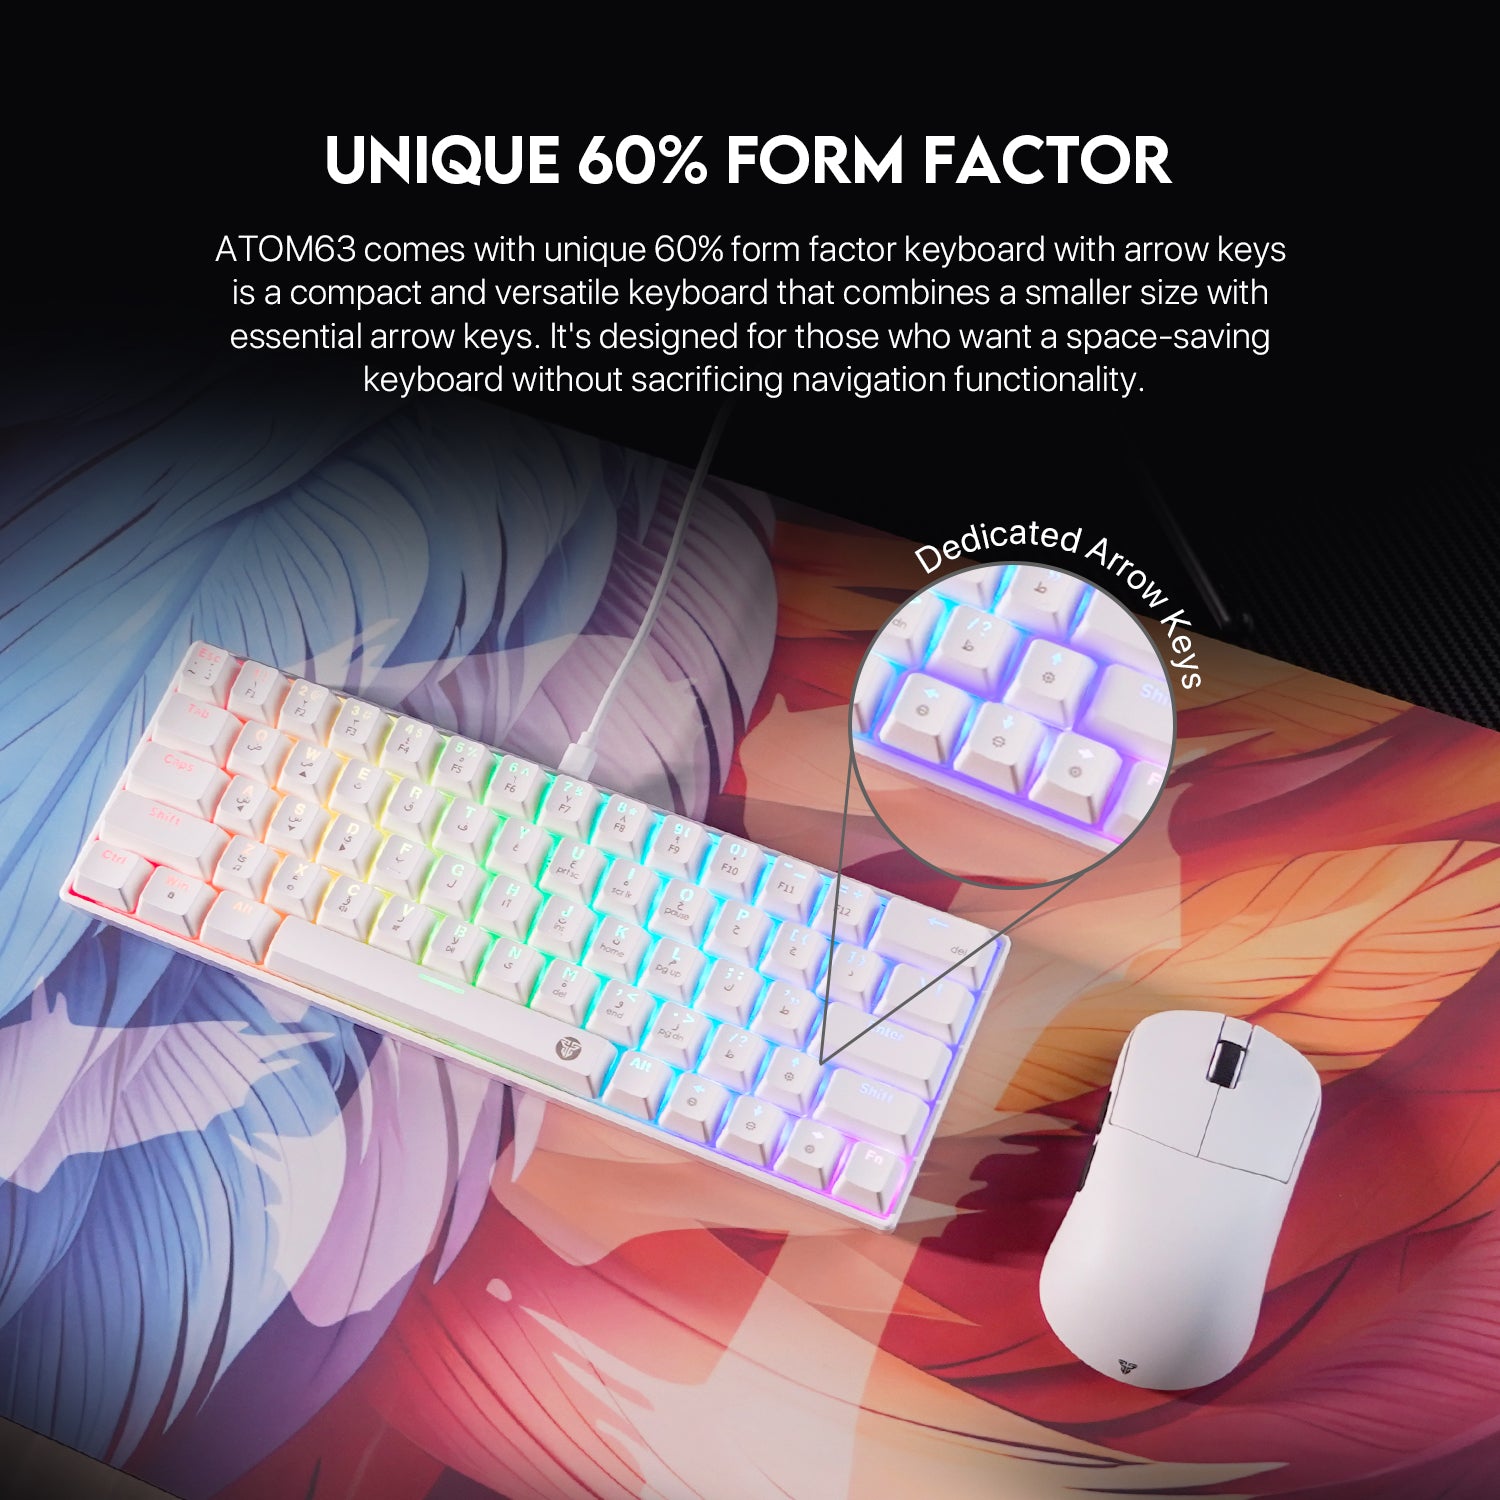 Fantech Atom63 MK859 Mechanical Gaming Keyboard Arabic/English